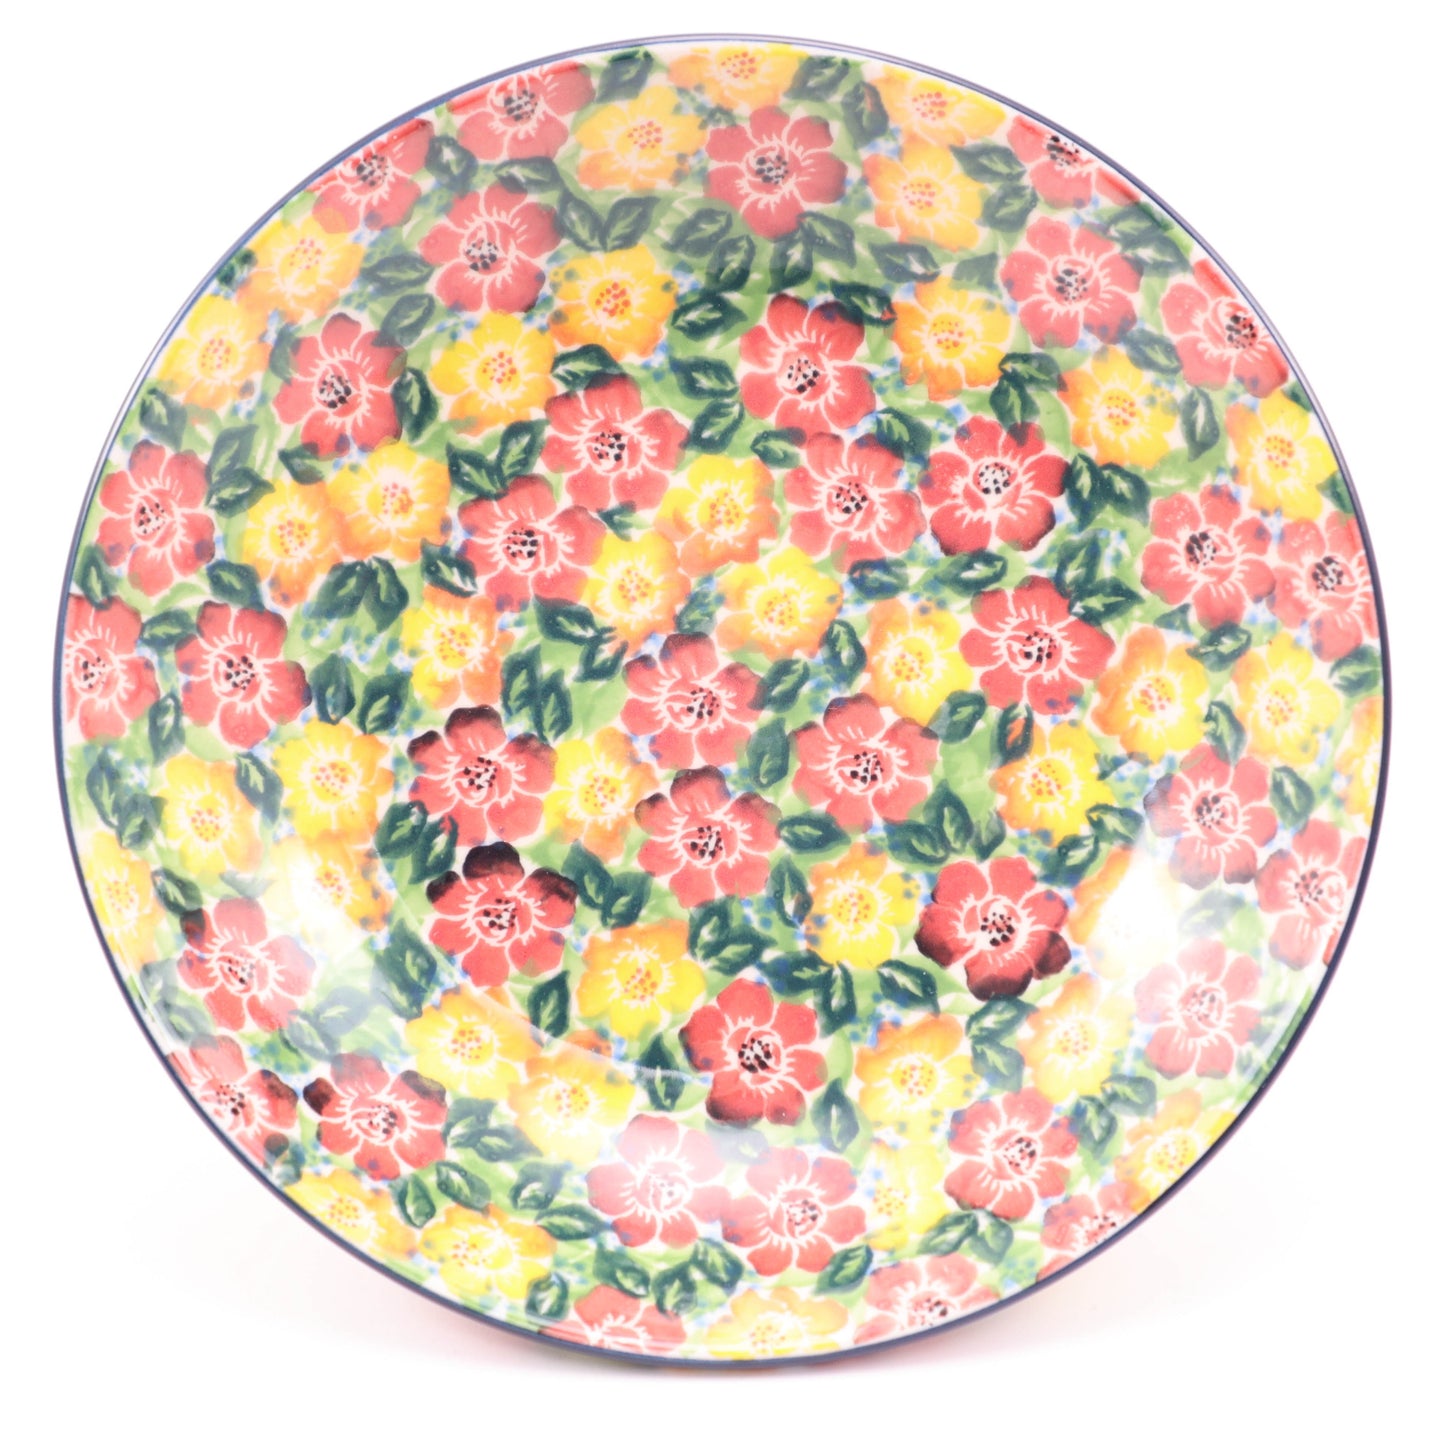 8.5" Pasta Plate. Pattern: Cheerful Bouquet